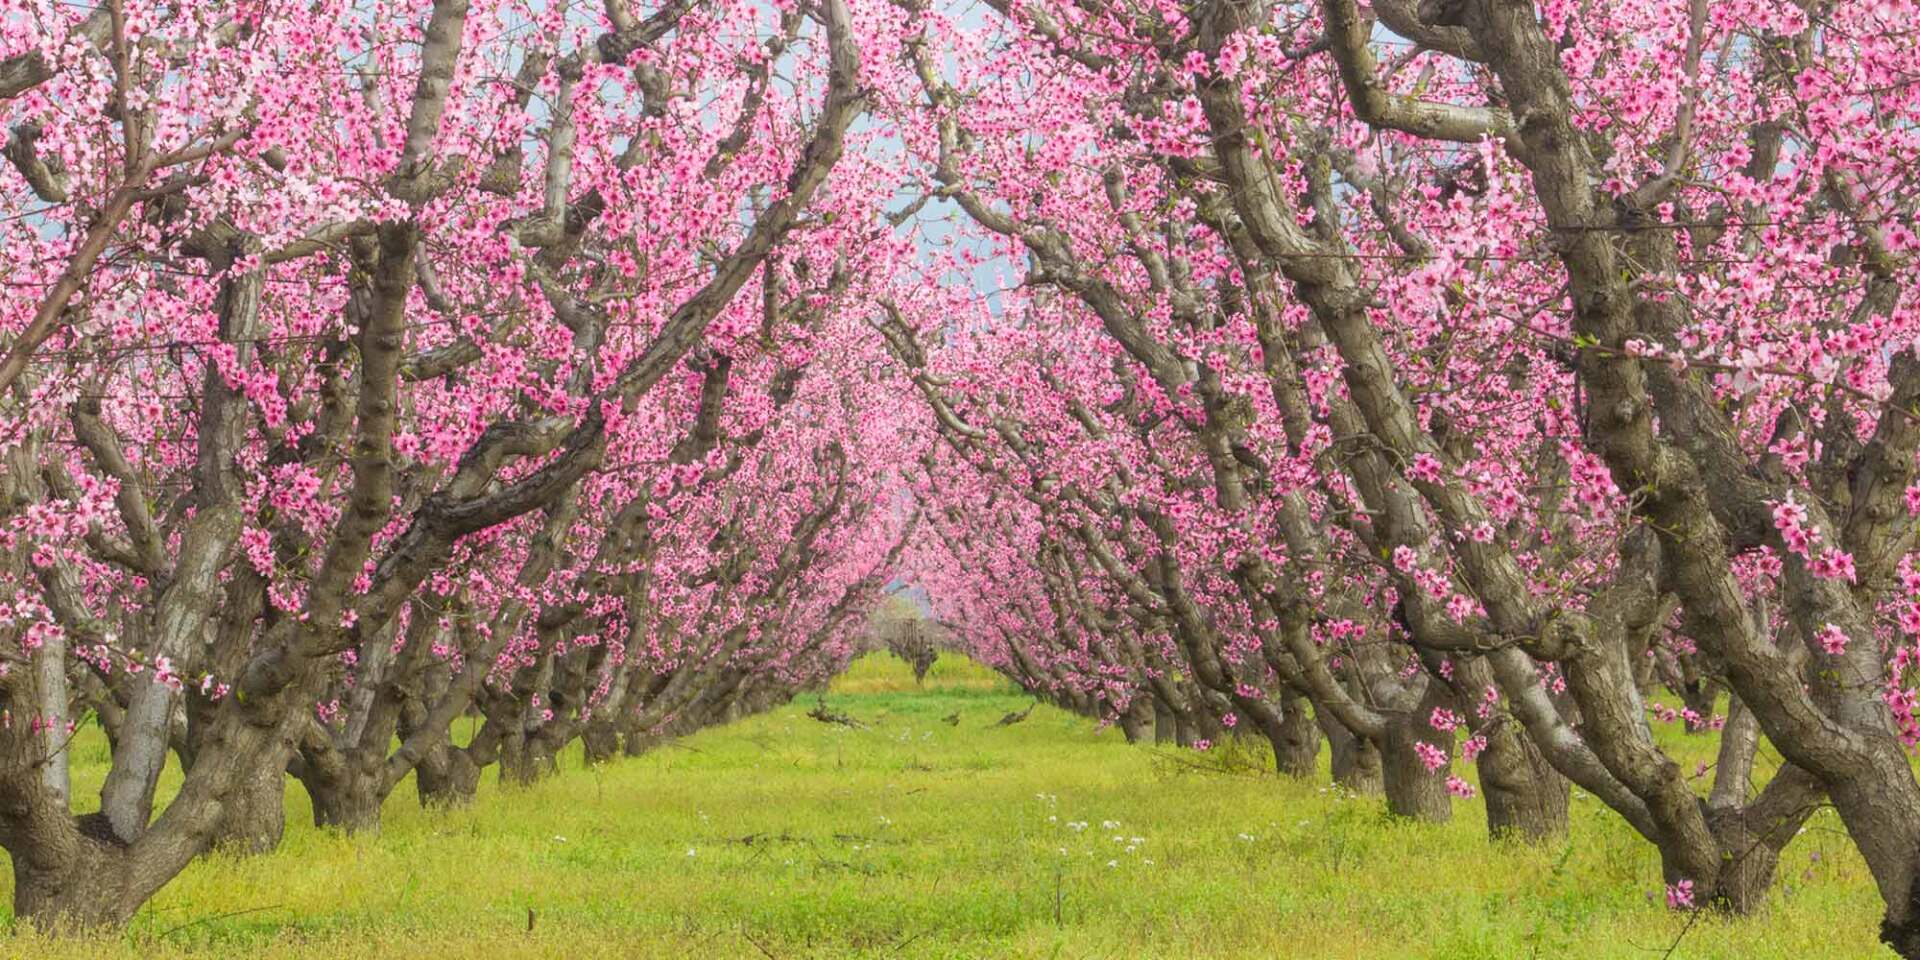 grassy path between cherry blossom trees